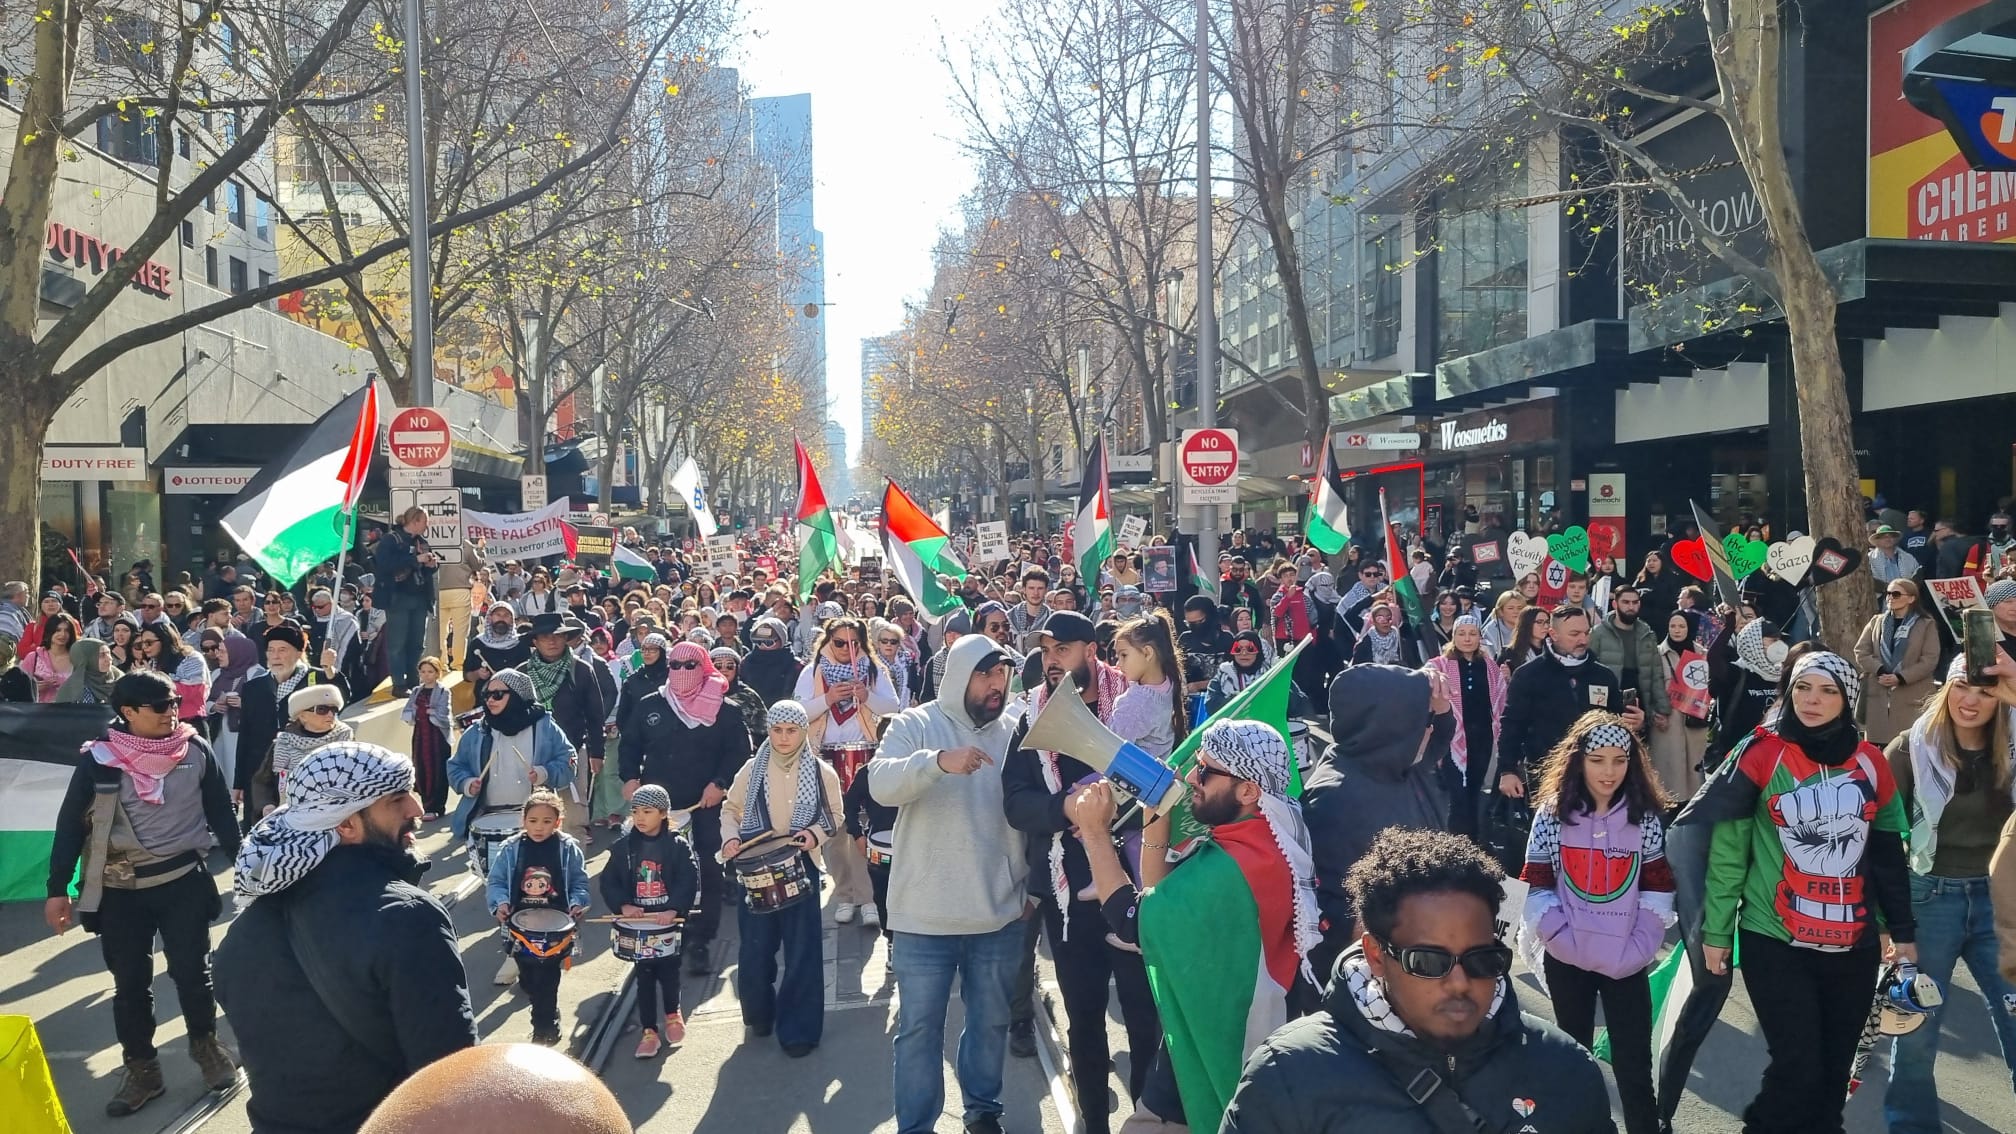 Melbourne palestine rally